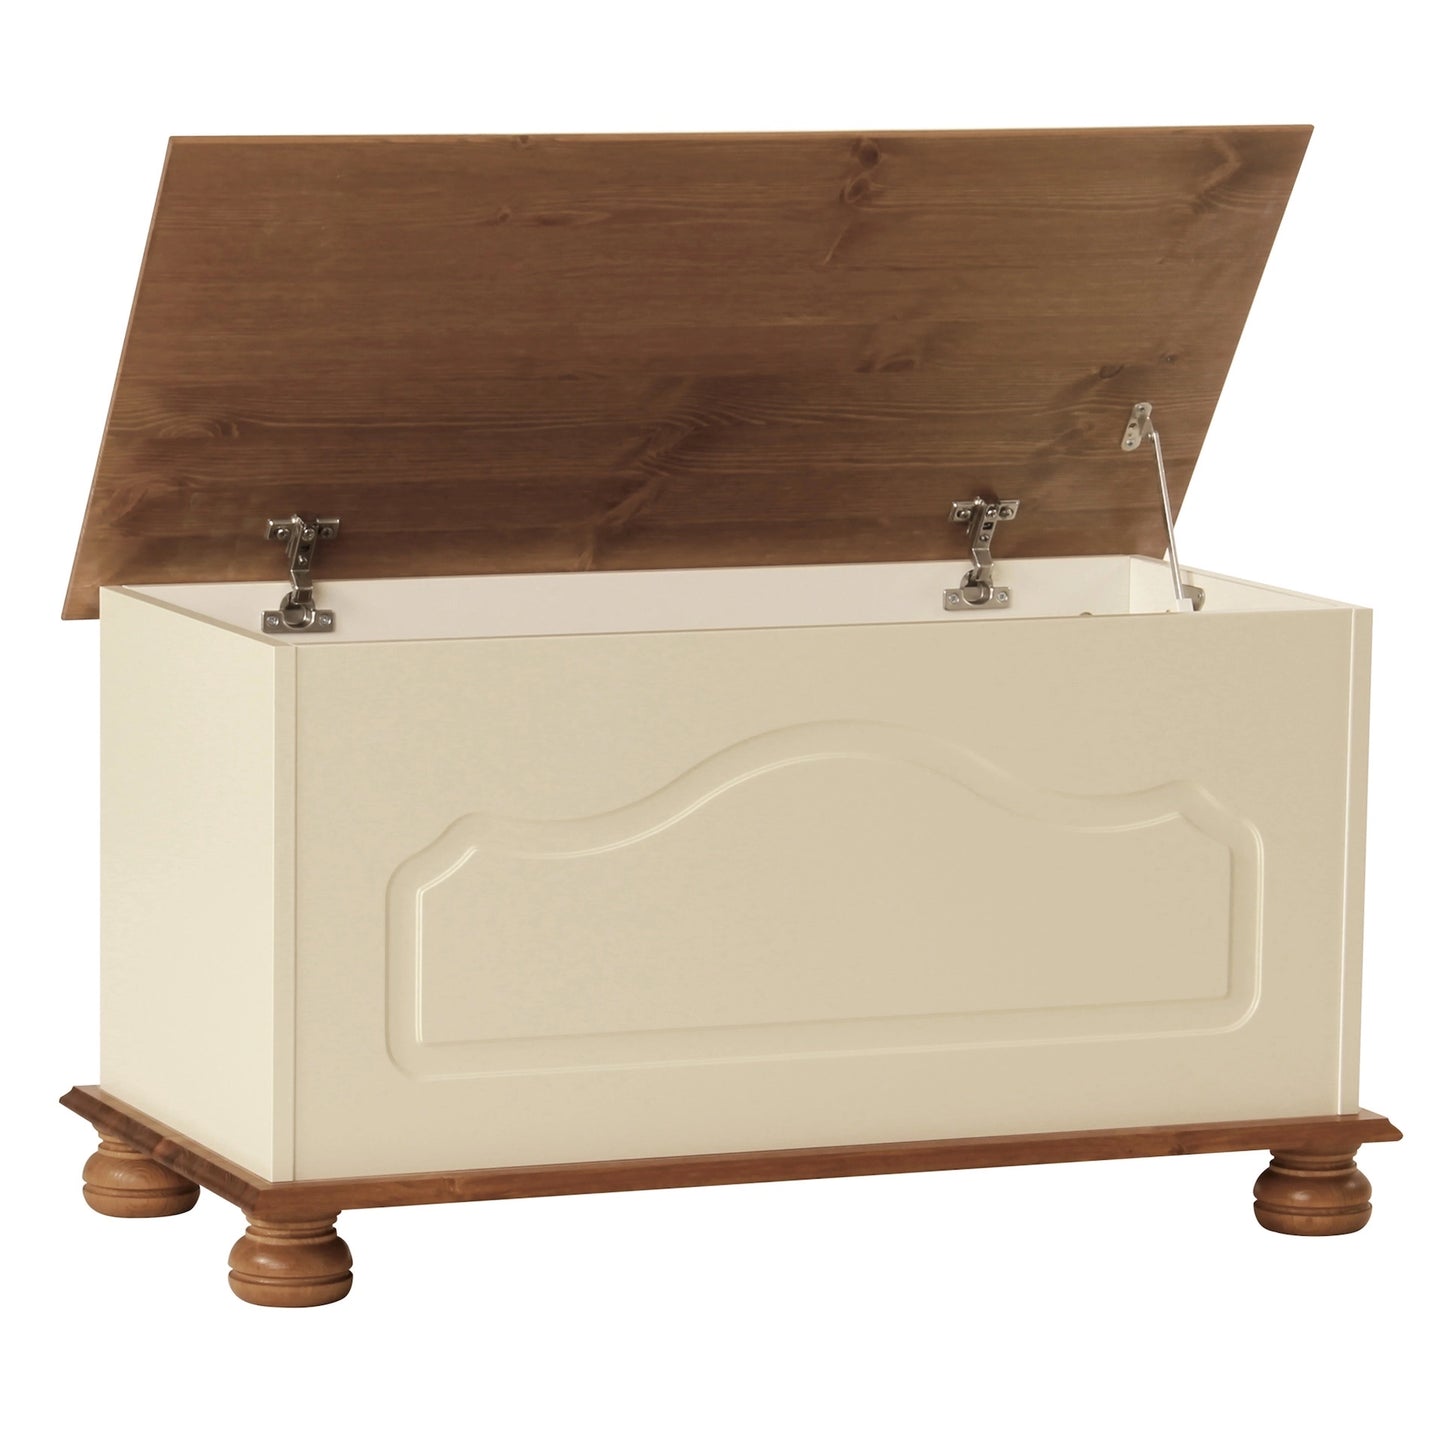 Furniture To Go Copenhagen Blanket Box in Cream/Pine